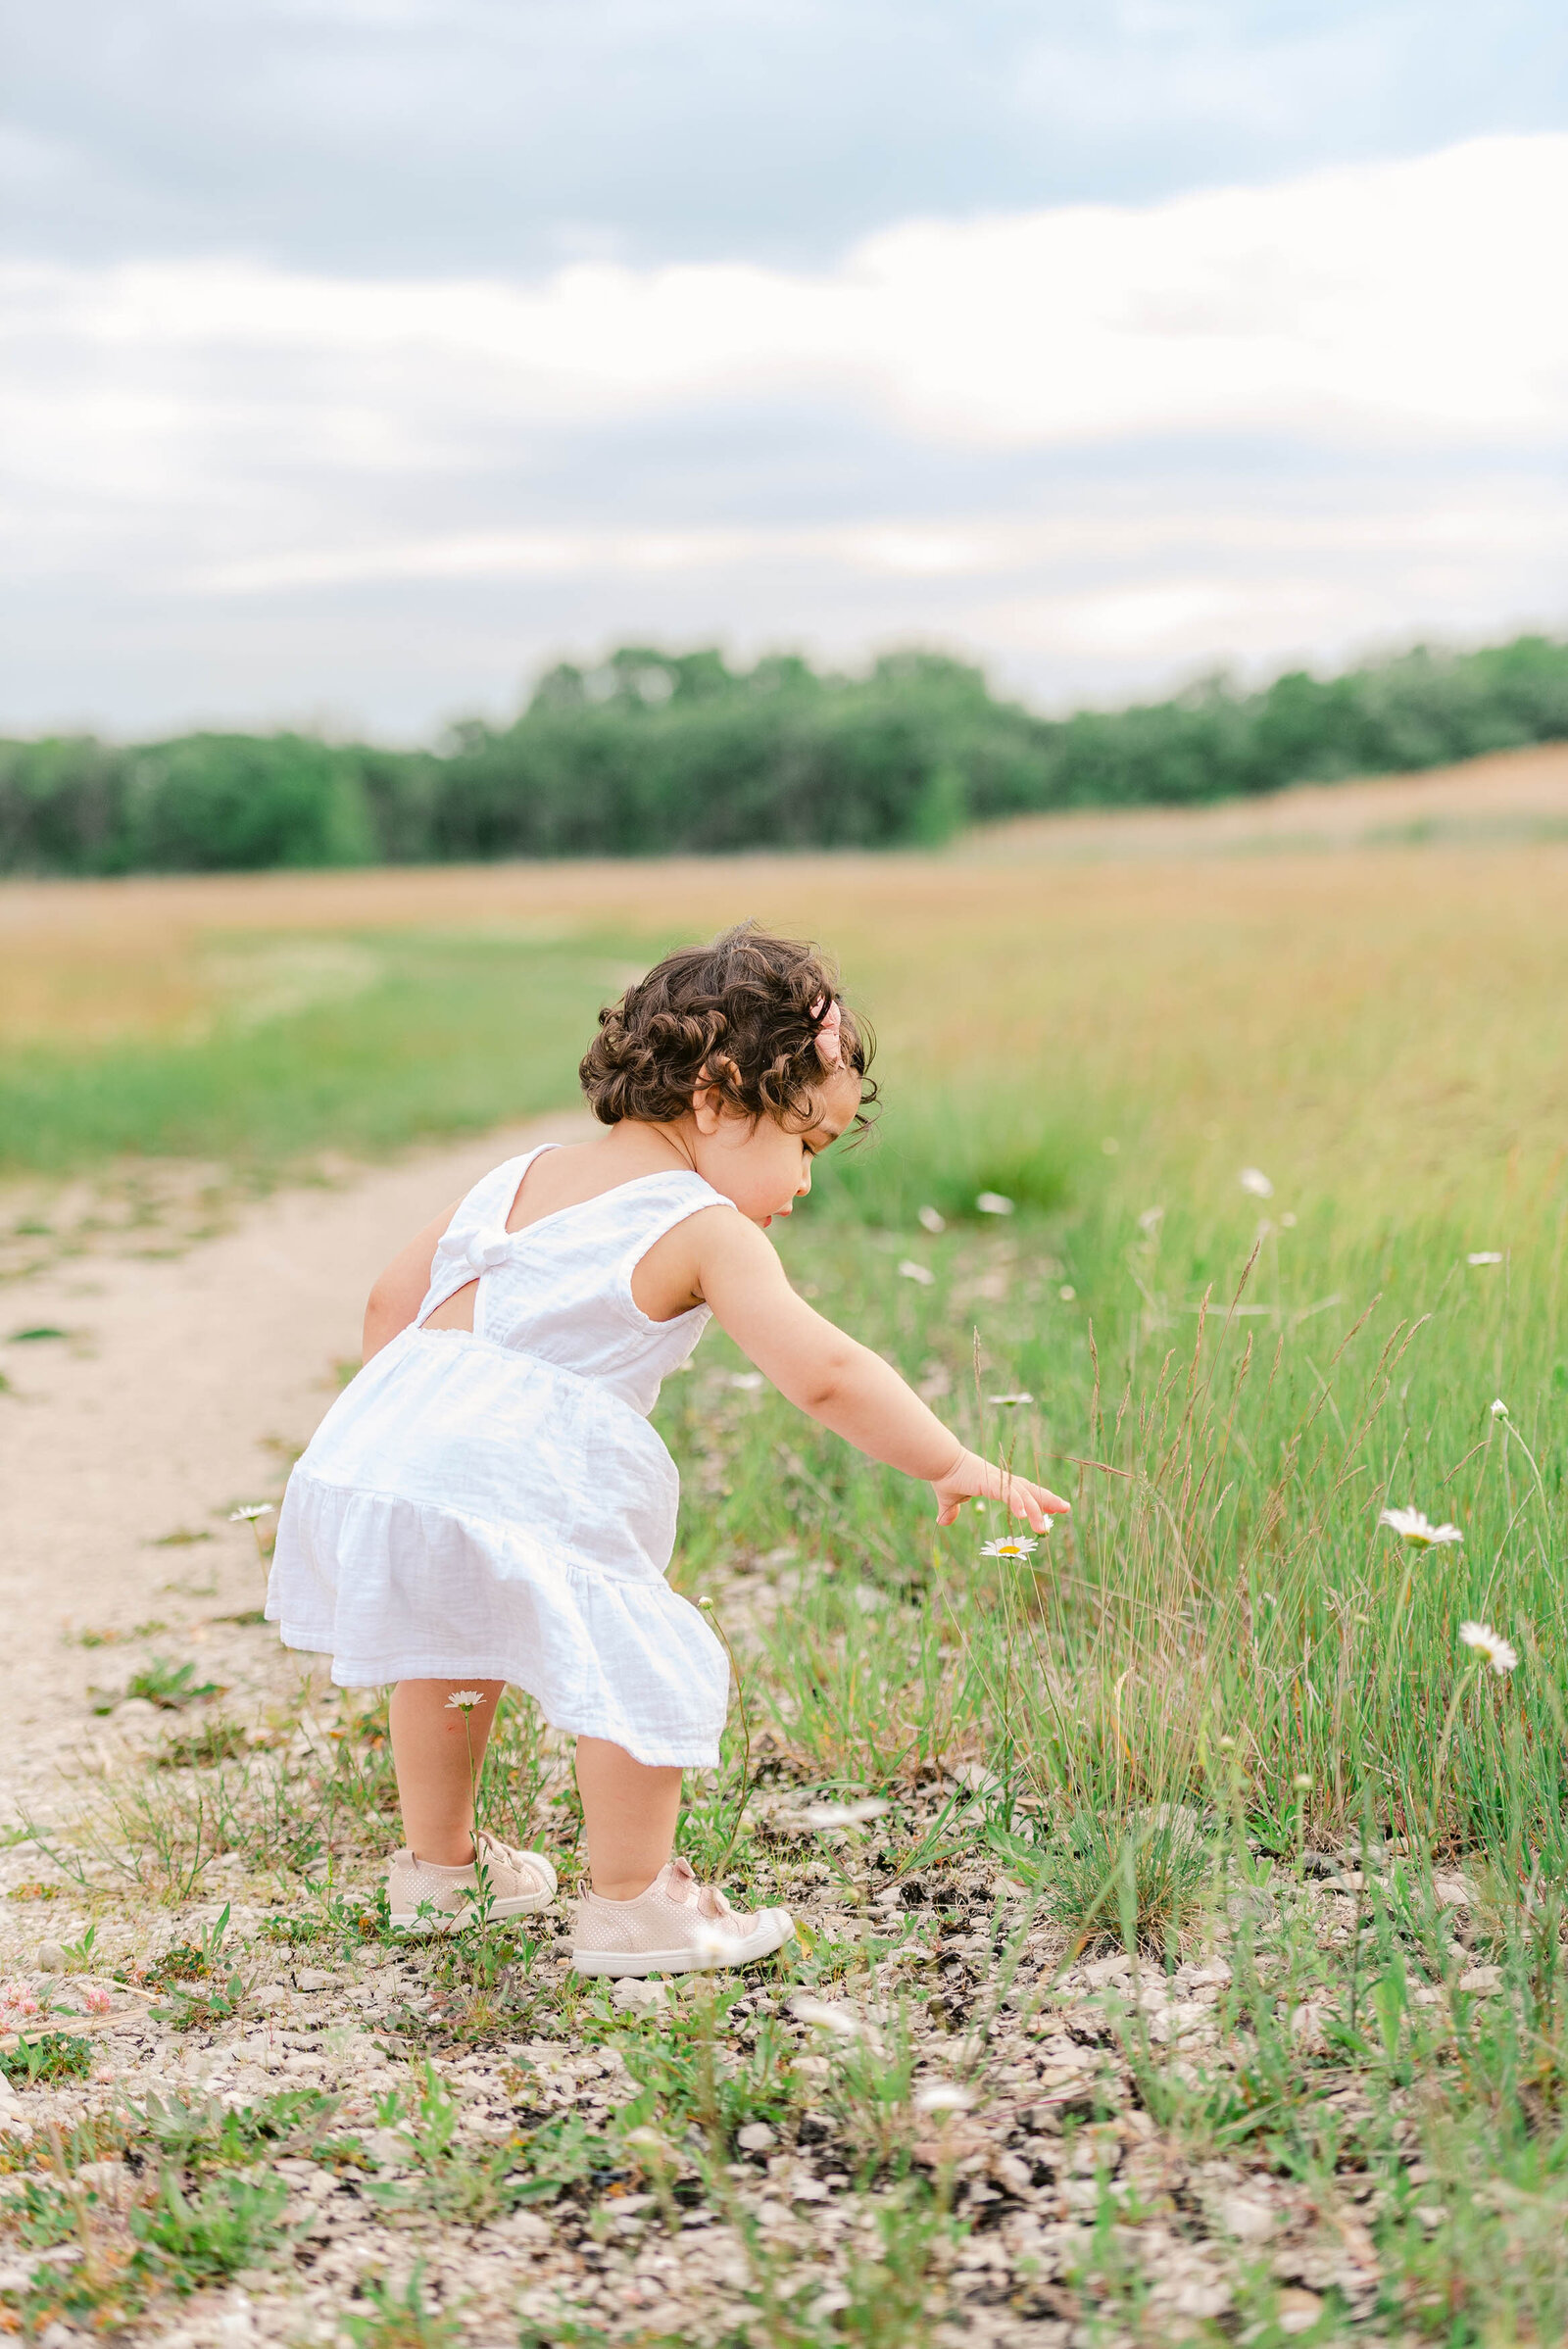 Little girl in white dress picking white flowers in a field